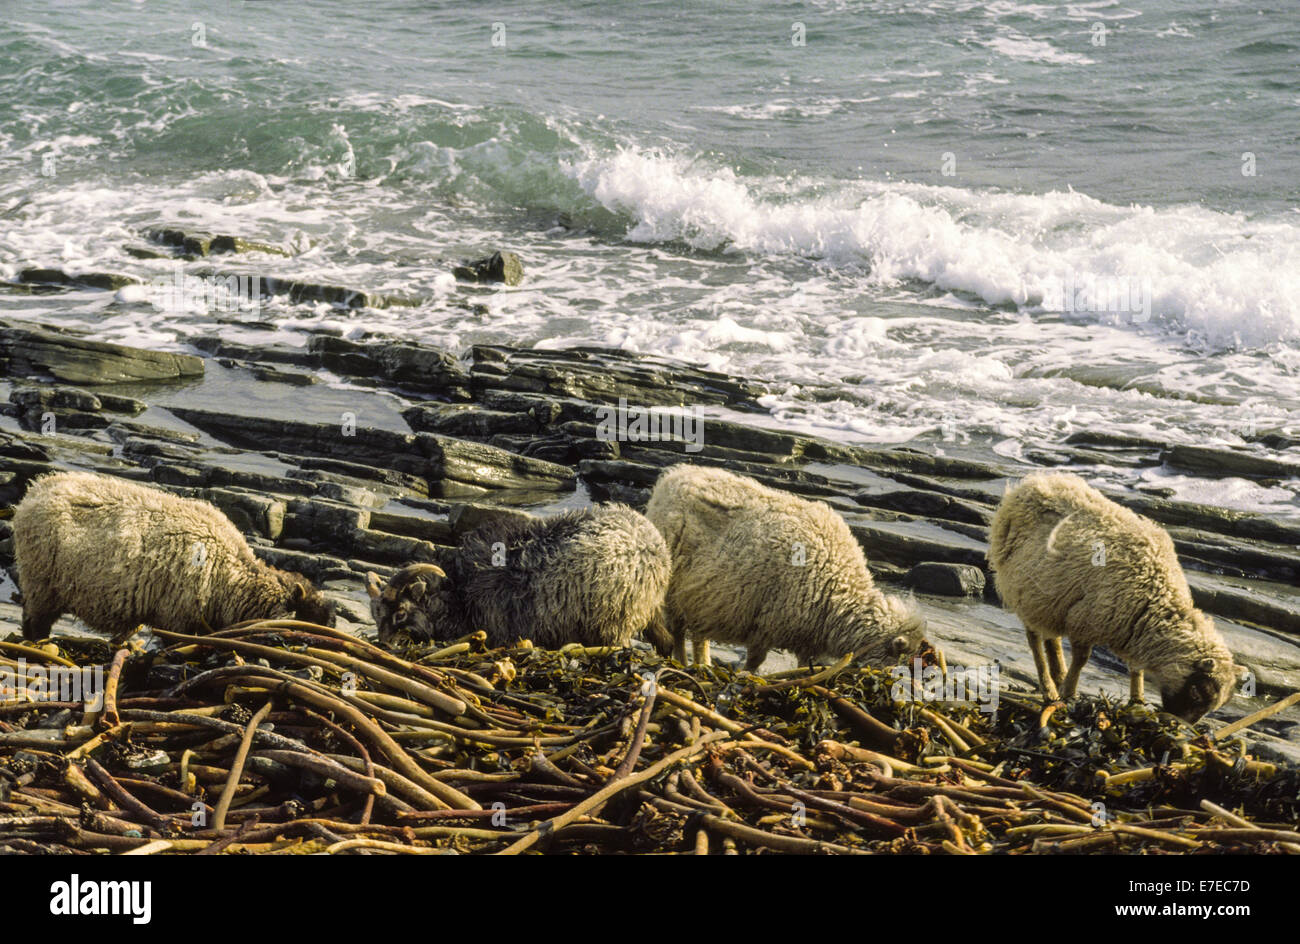 NORTH RONALDSAY ORKNEY SHEEP FEEDING ON KELP OR SEAWEED ON THE SEASHORE Stock Photo